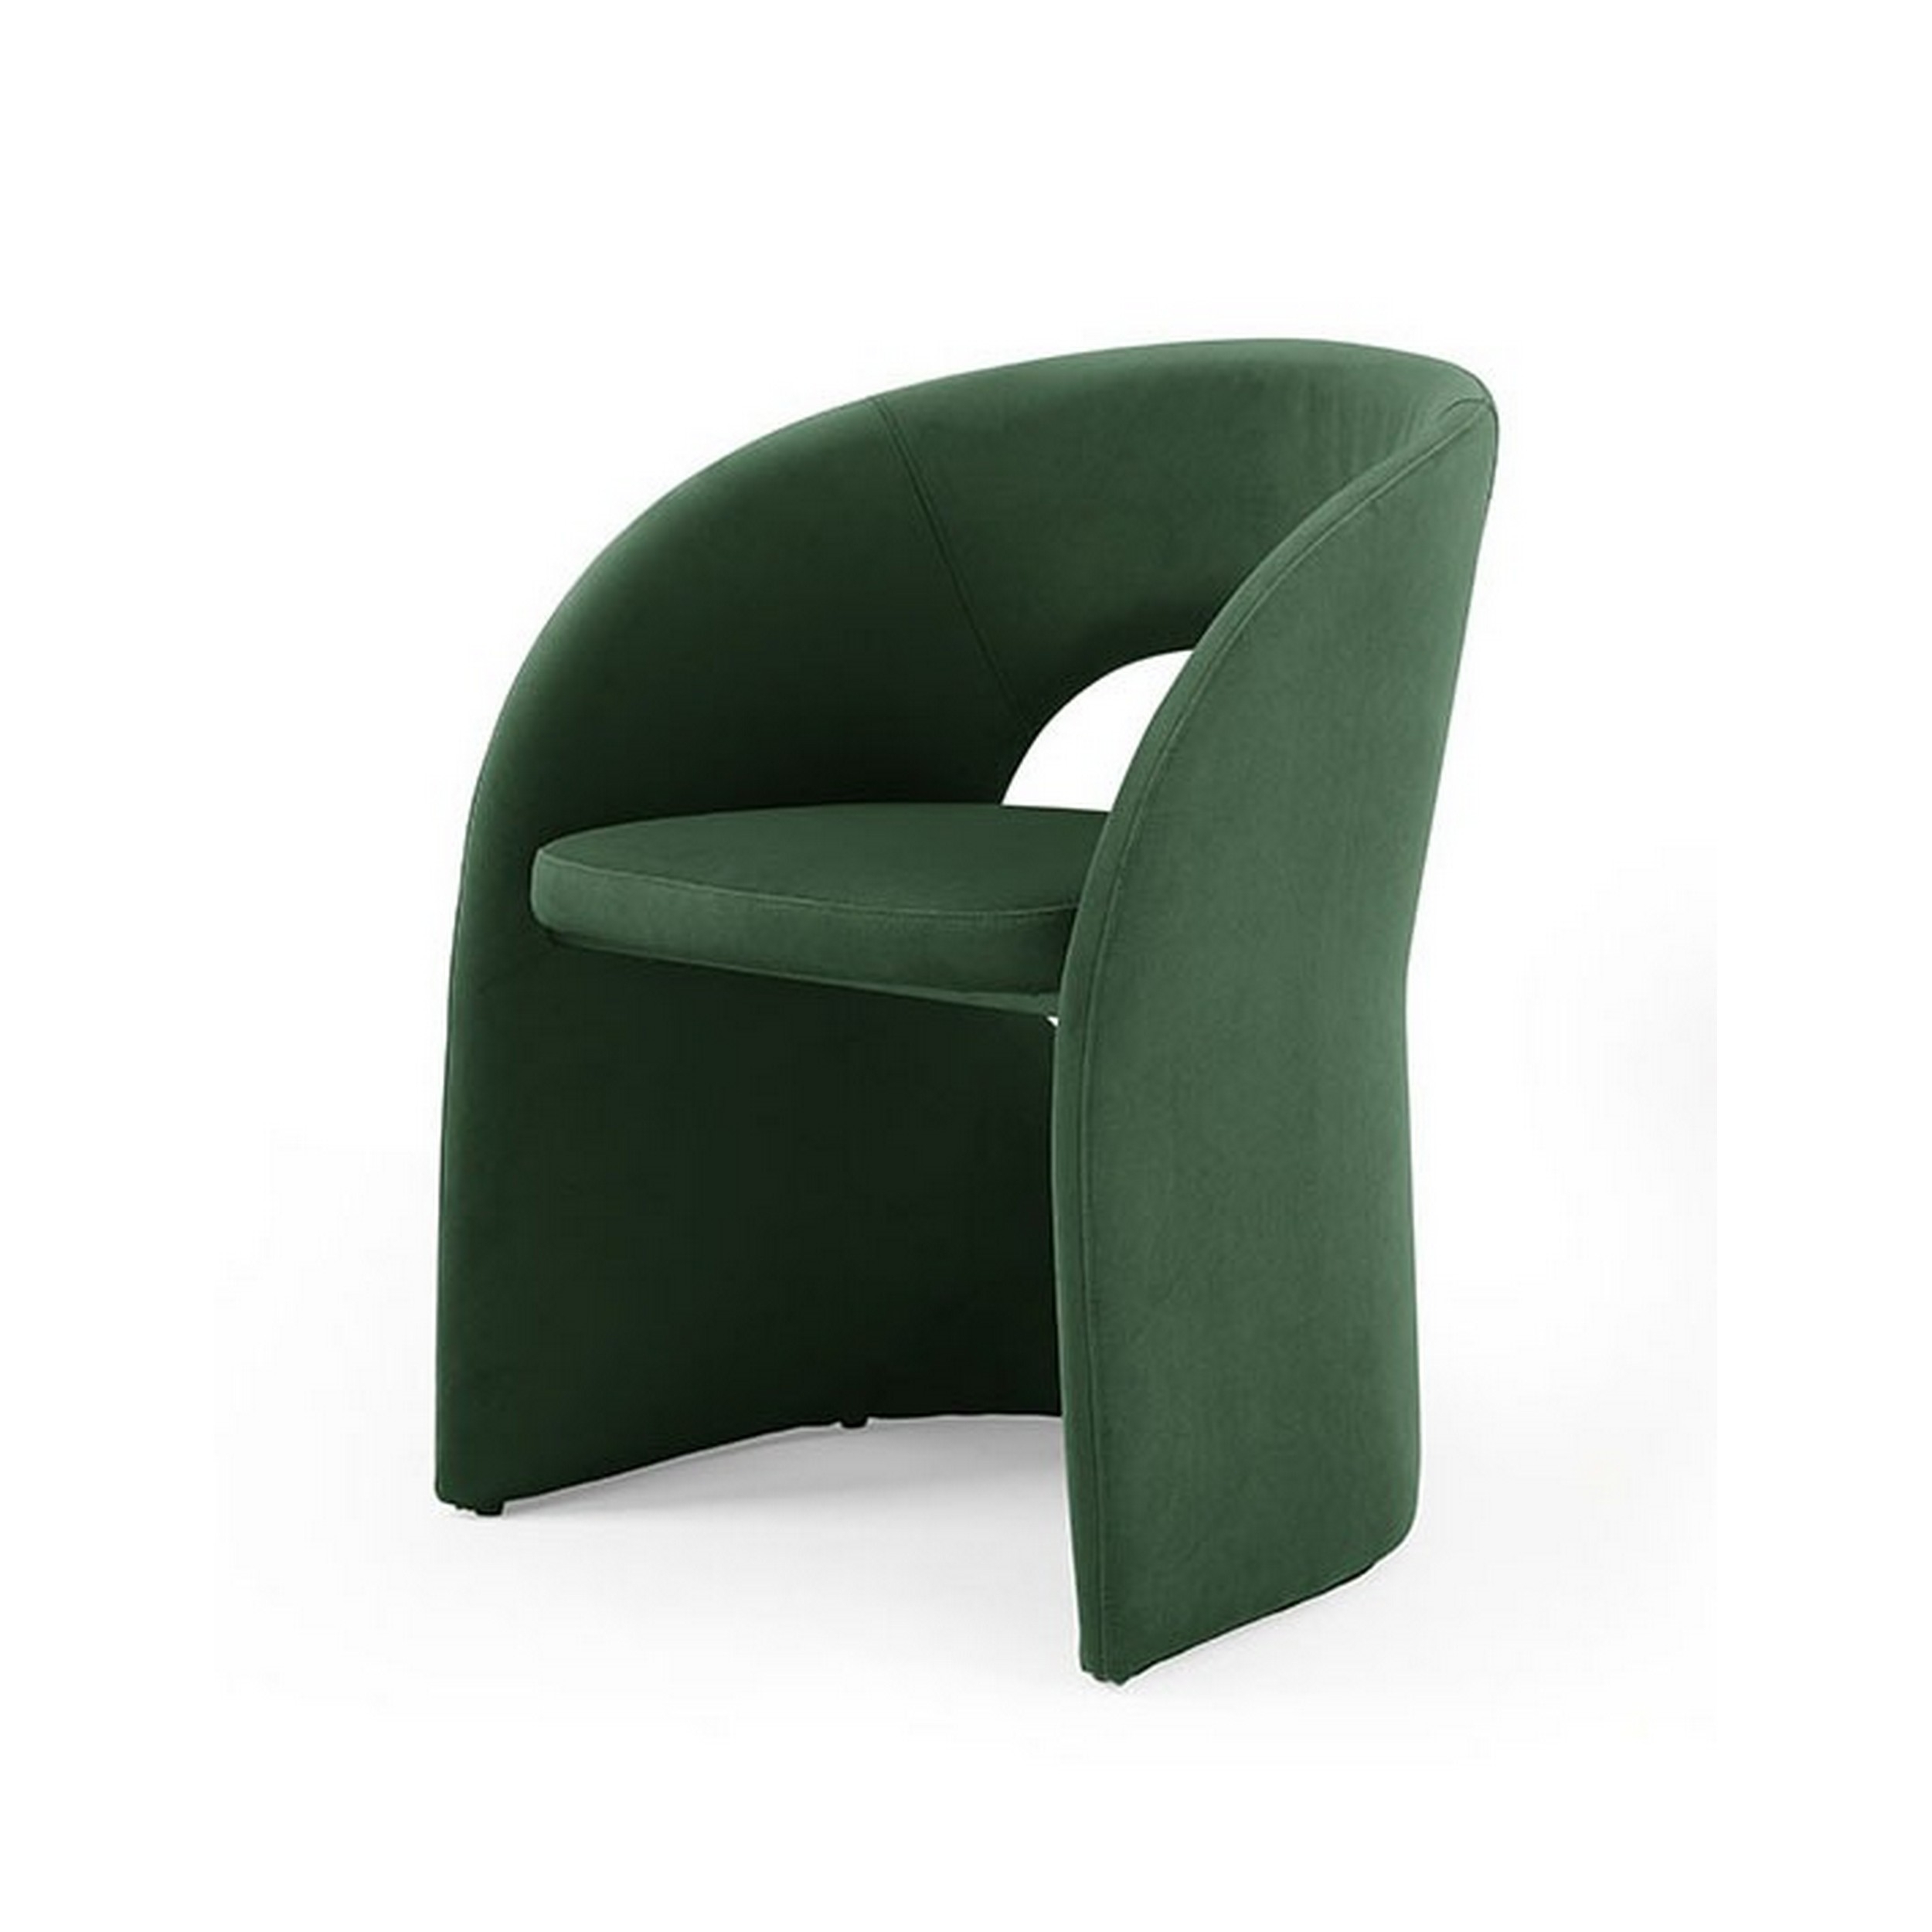 24 Inch Dining Chair, Green Fabric, Iron Frame, Curved Cutout Backrest- Saltoro Sherpi